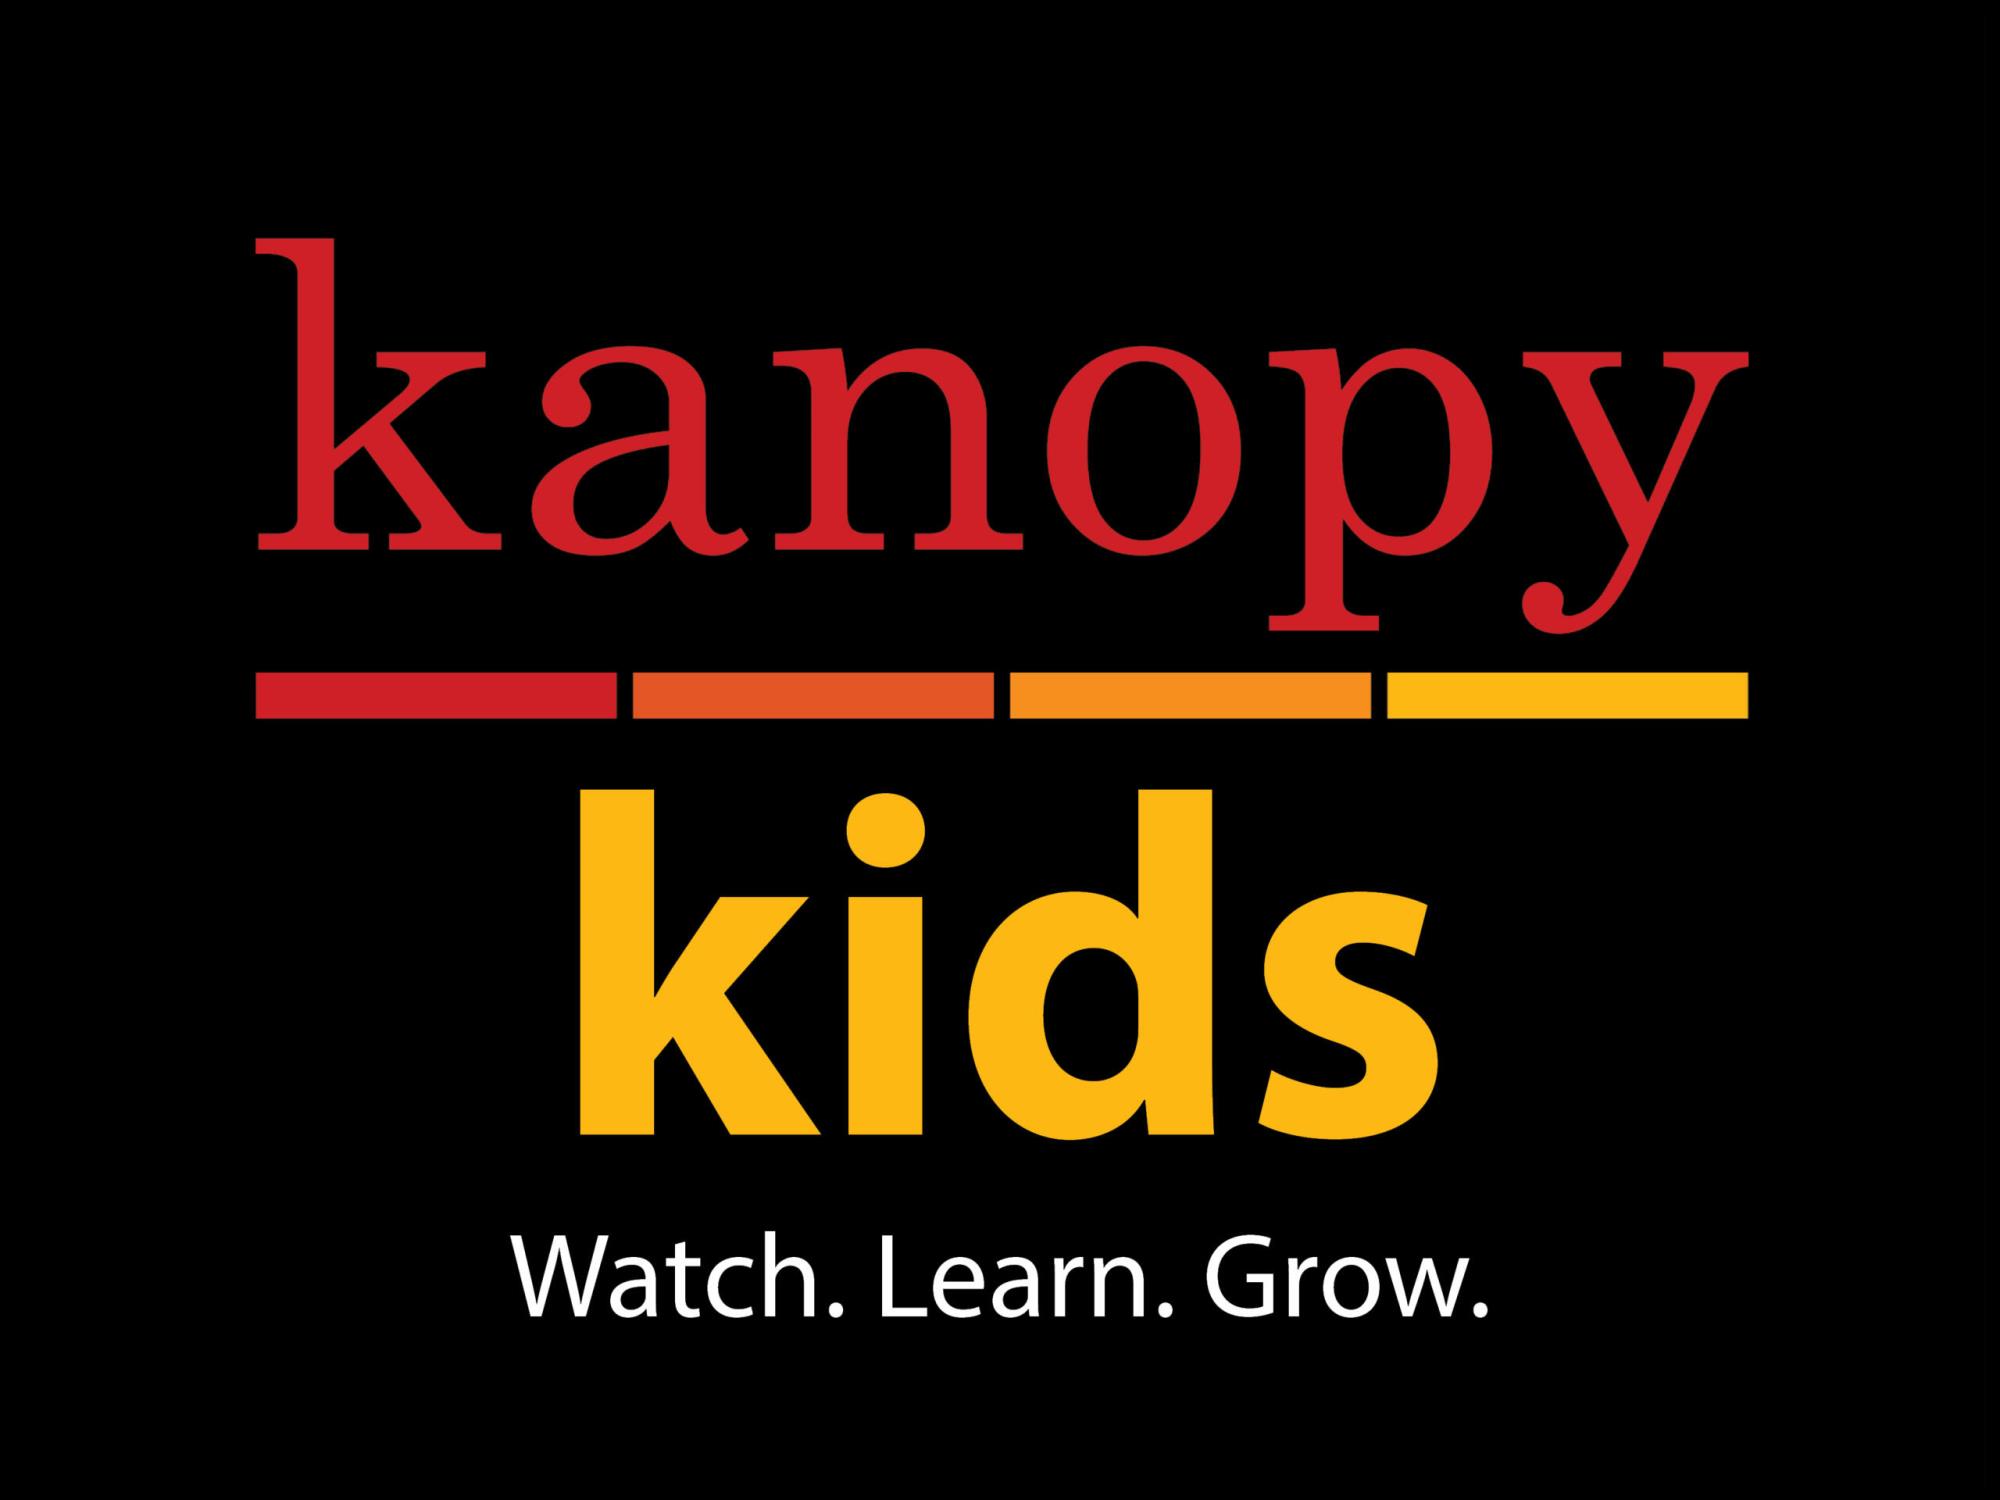 Kanopy kids